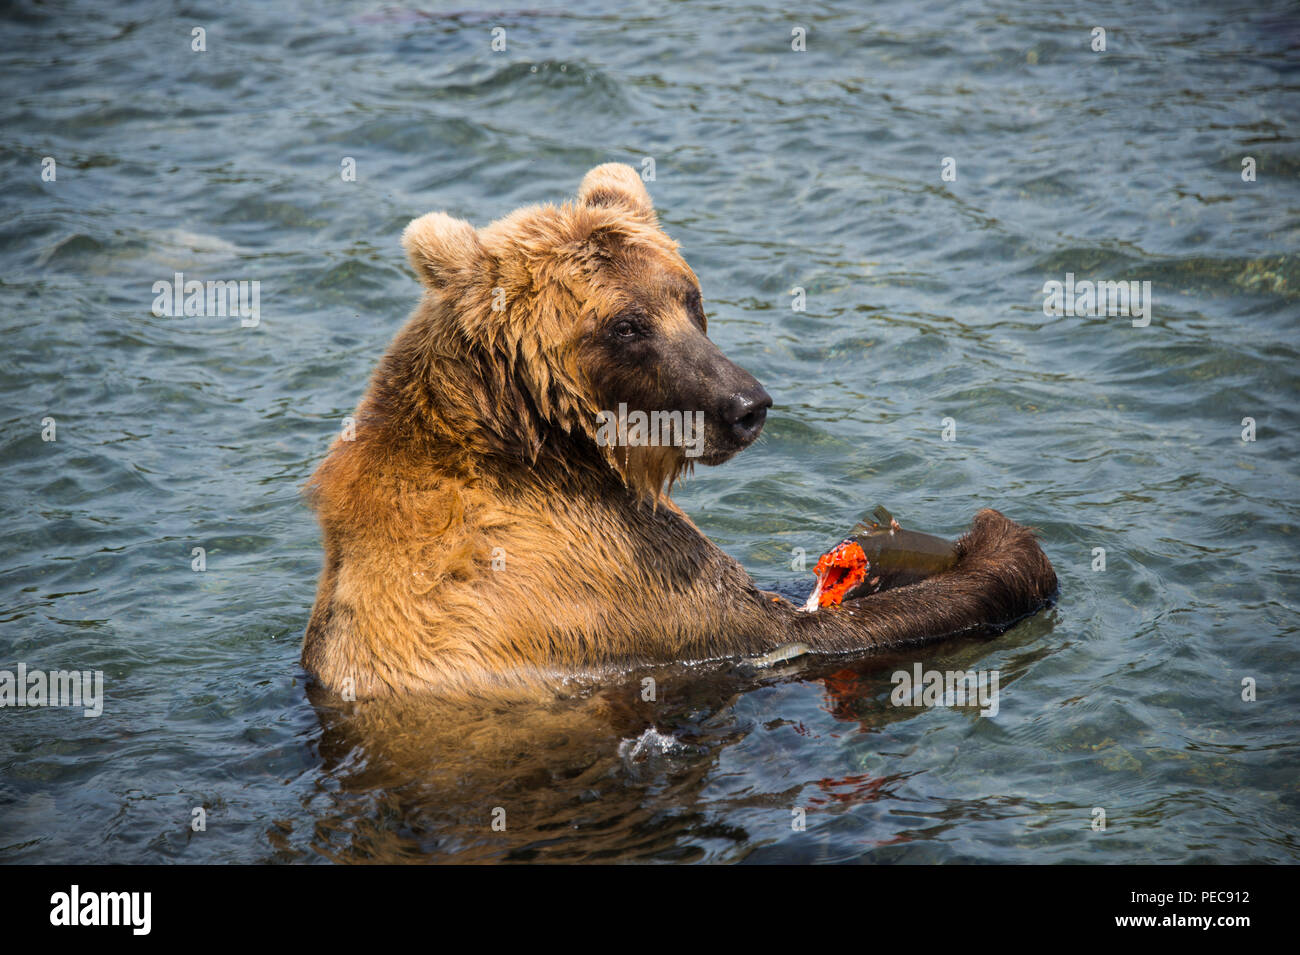 Kamchatka brown bear (Ursus arctos beringianus) in water, eating salmon, Kurile lake, Kamchatka, Russia Stock Photo